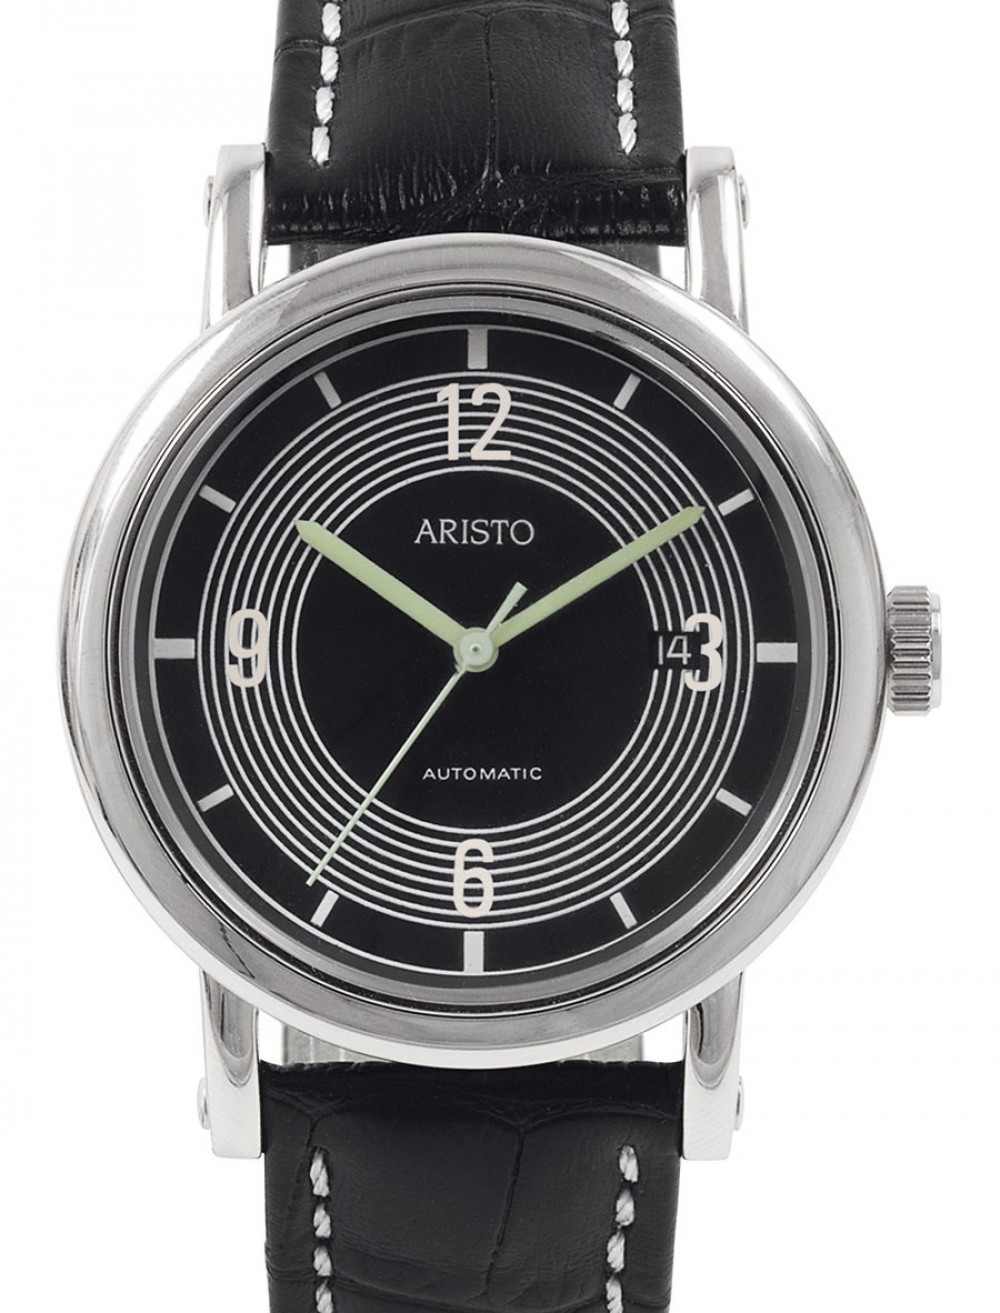 Zegarek firmy Aristo, model 190 SL